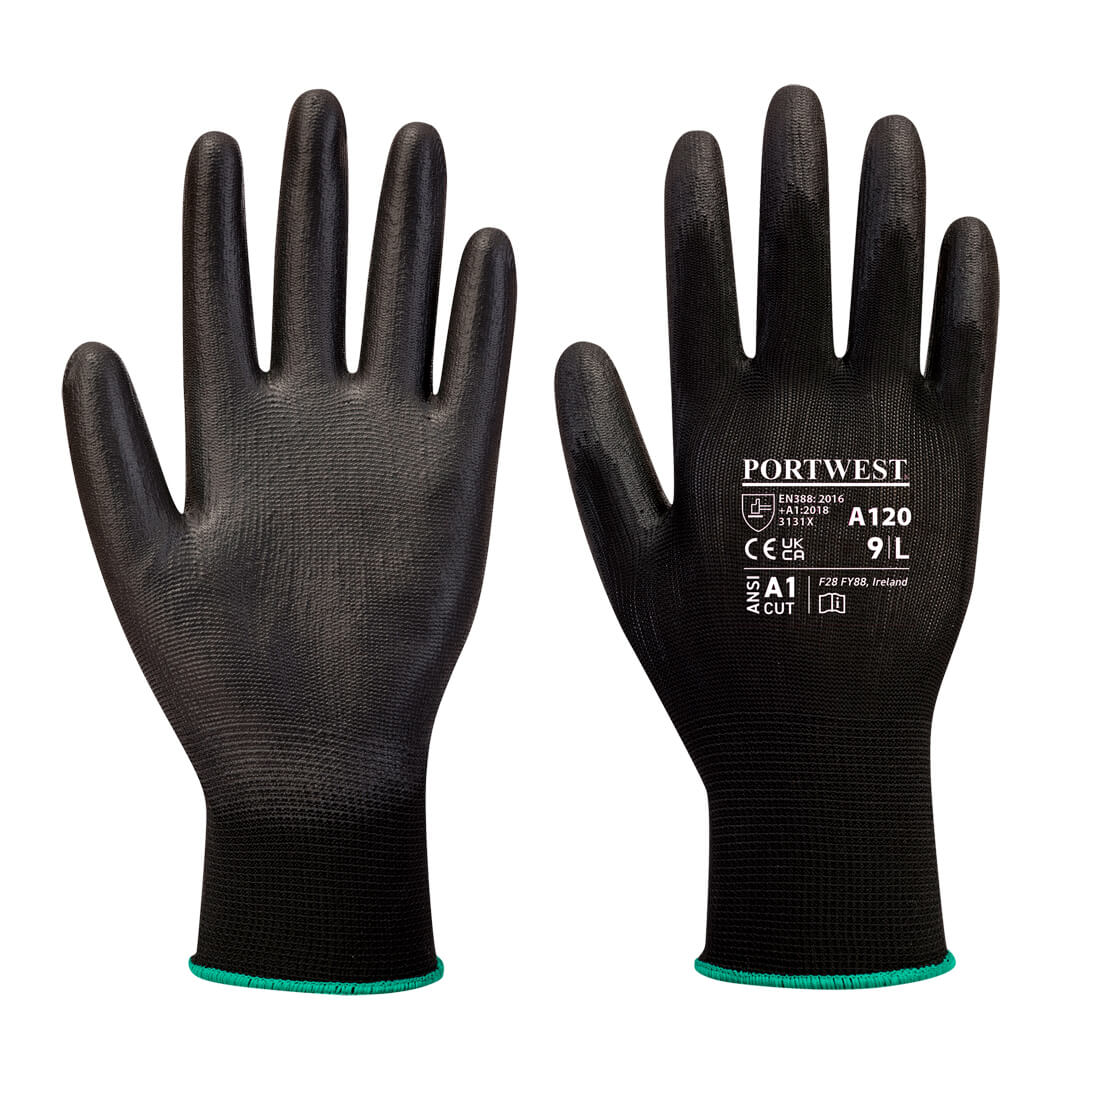 A120 Portwest® PU Coated A1 Grippy Work Gloves - Black